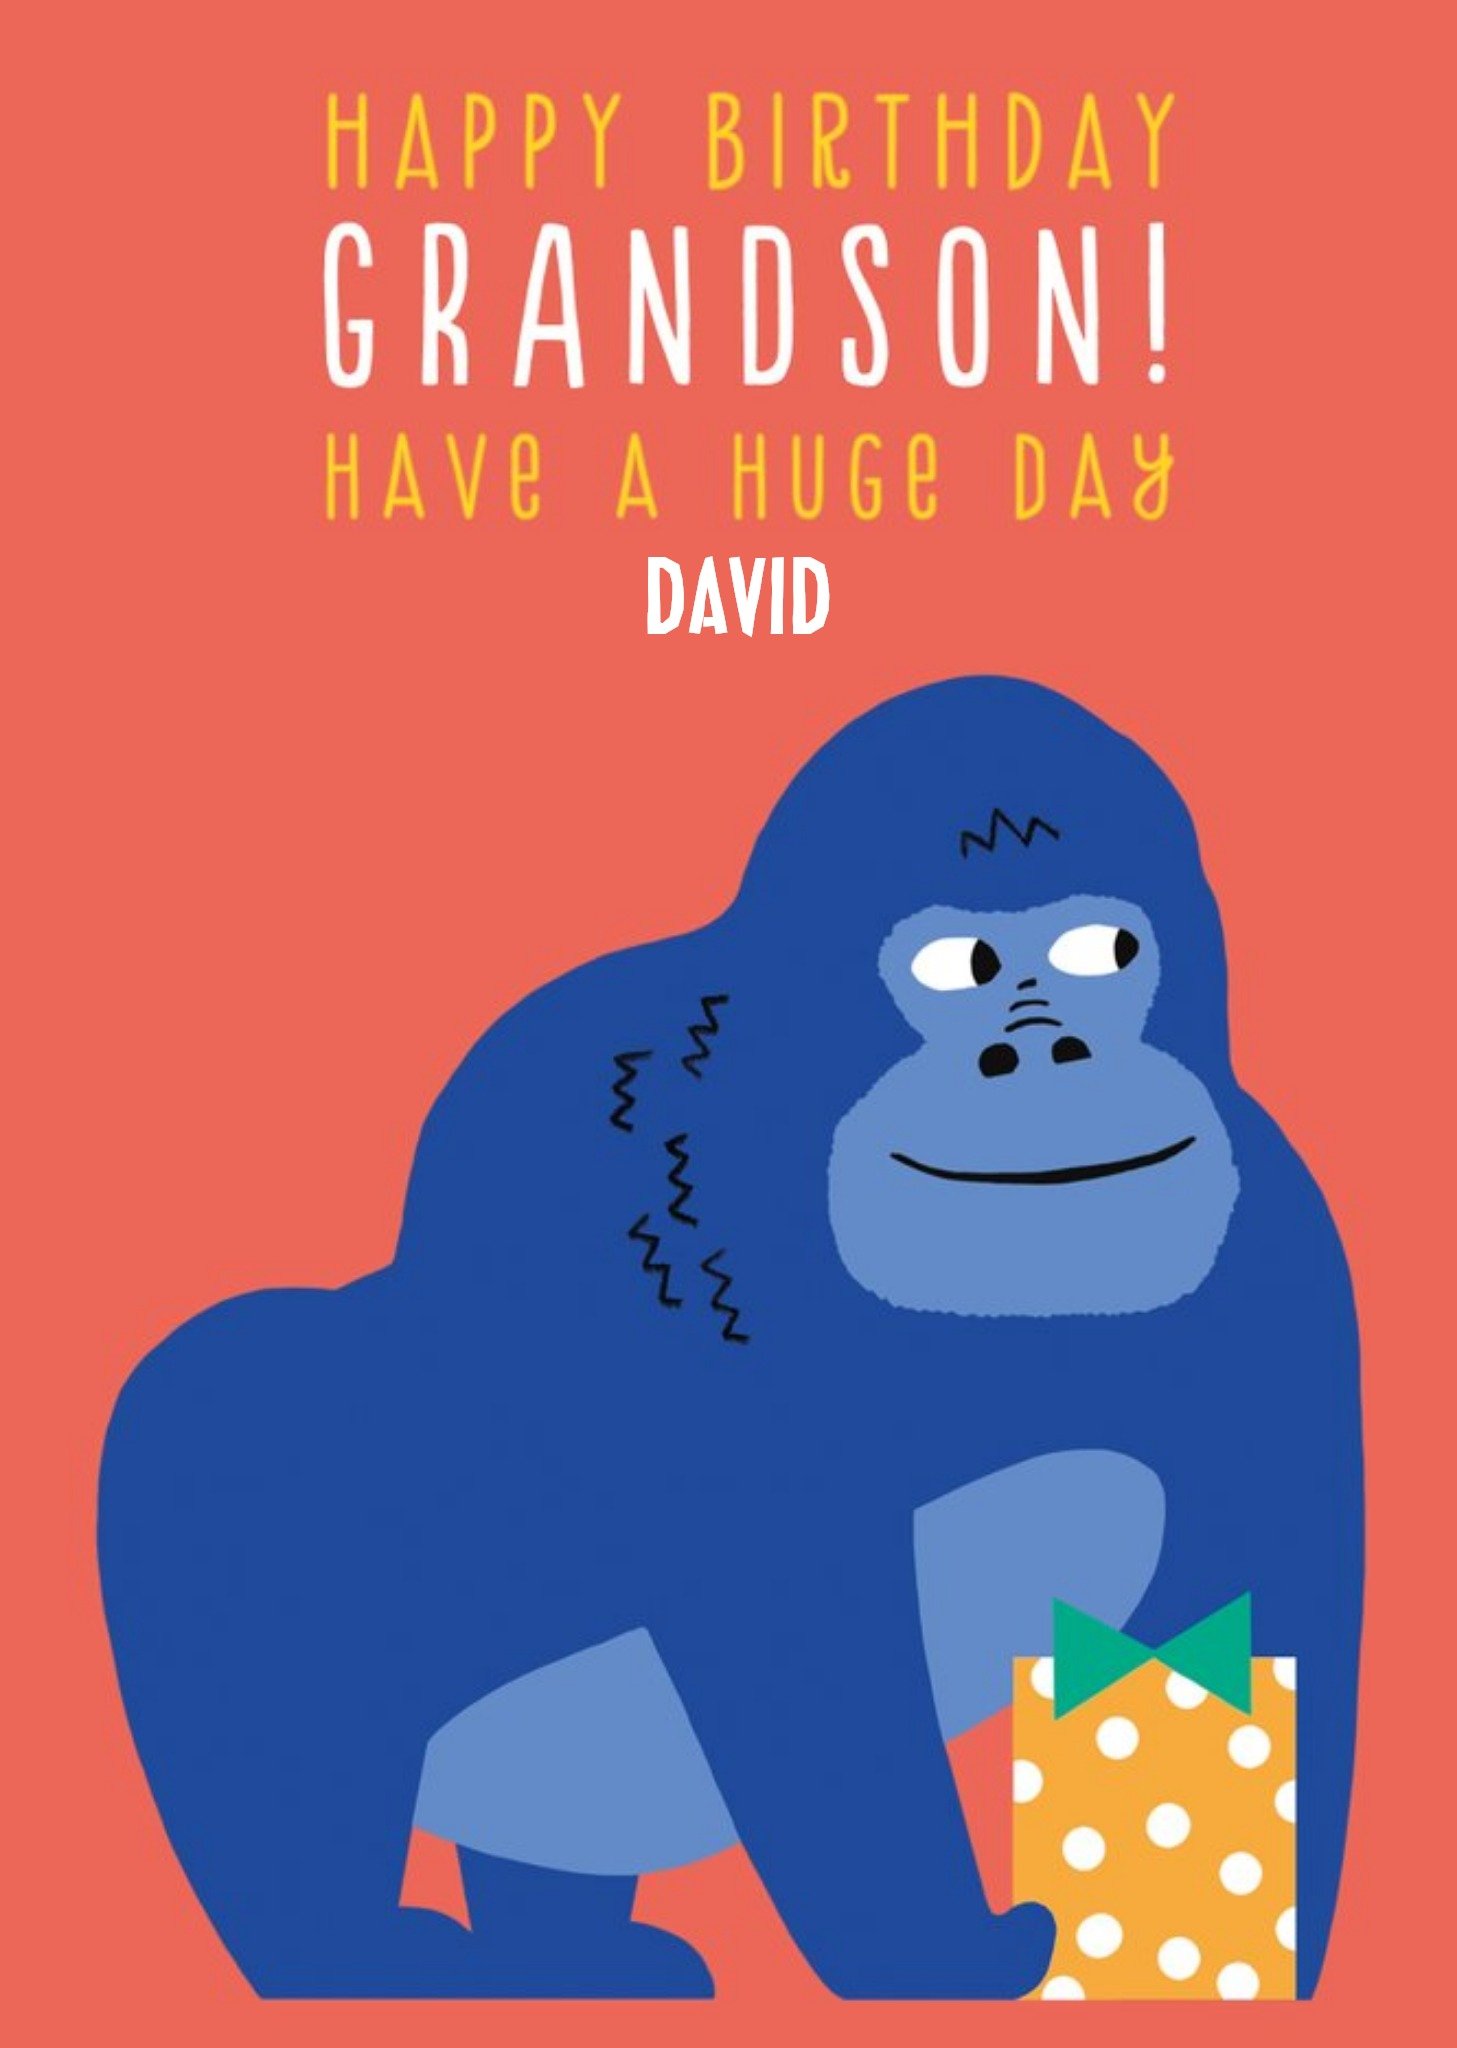 Moonpig Illustration Of A Gorilla With A Present Grandson's Birthday Card Ecard